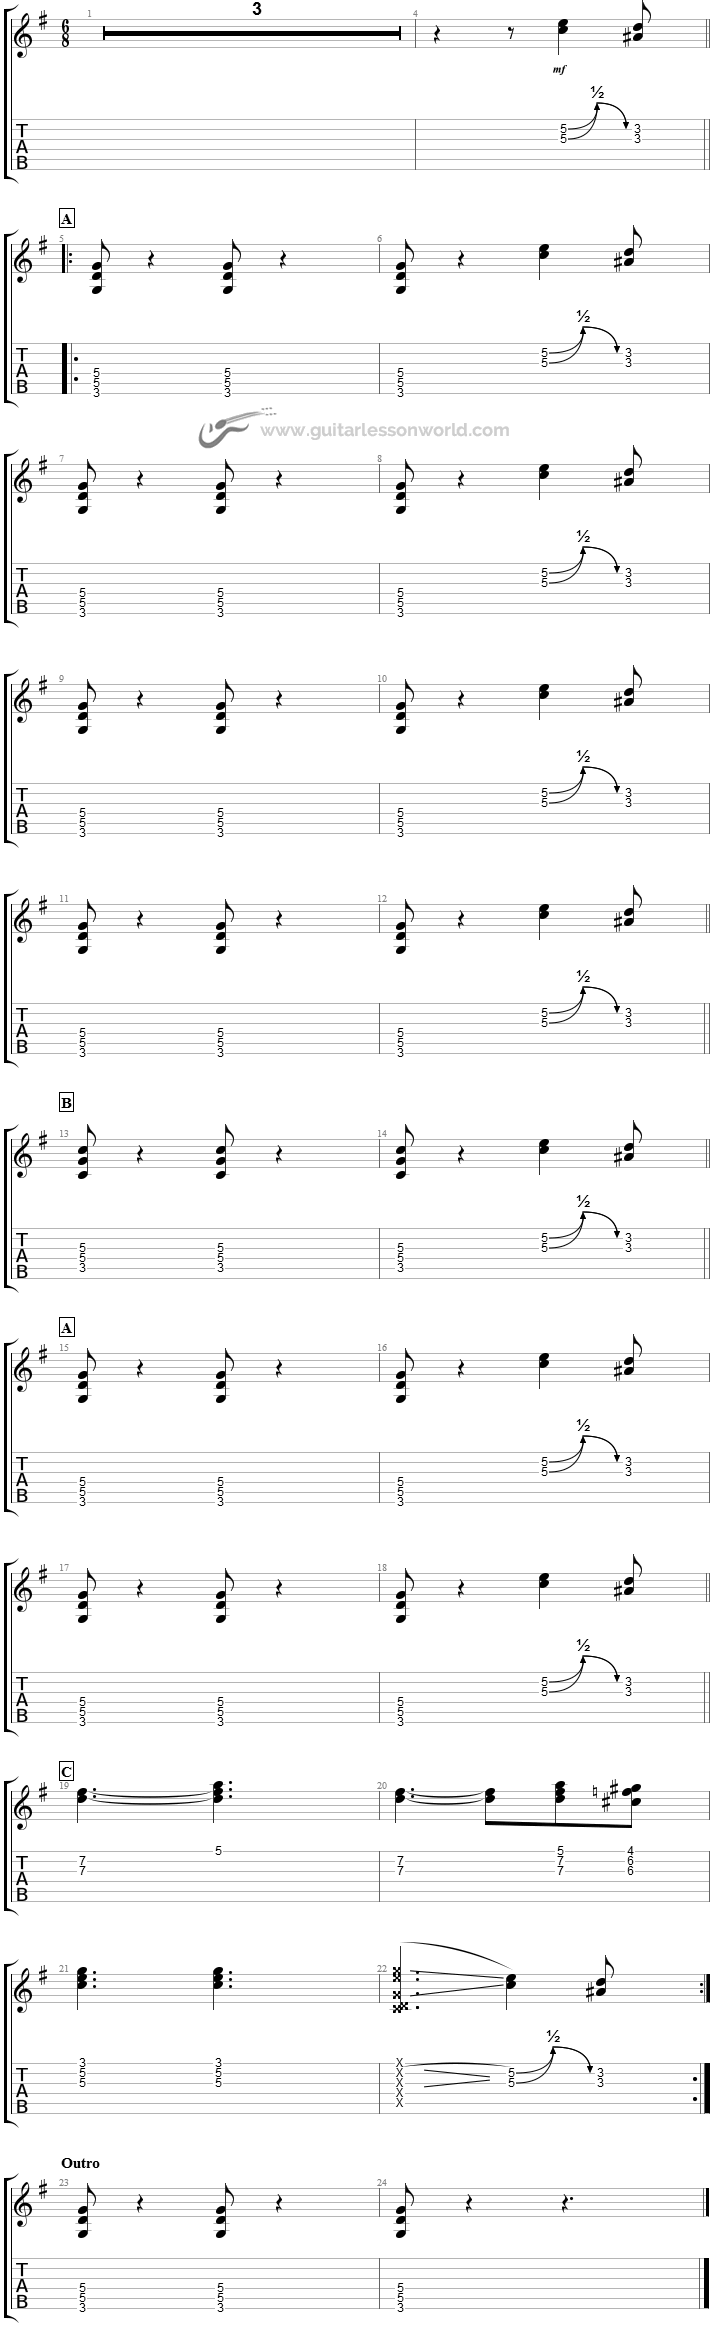 Rhythm Riff Backing Track Notation and Tab